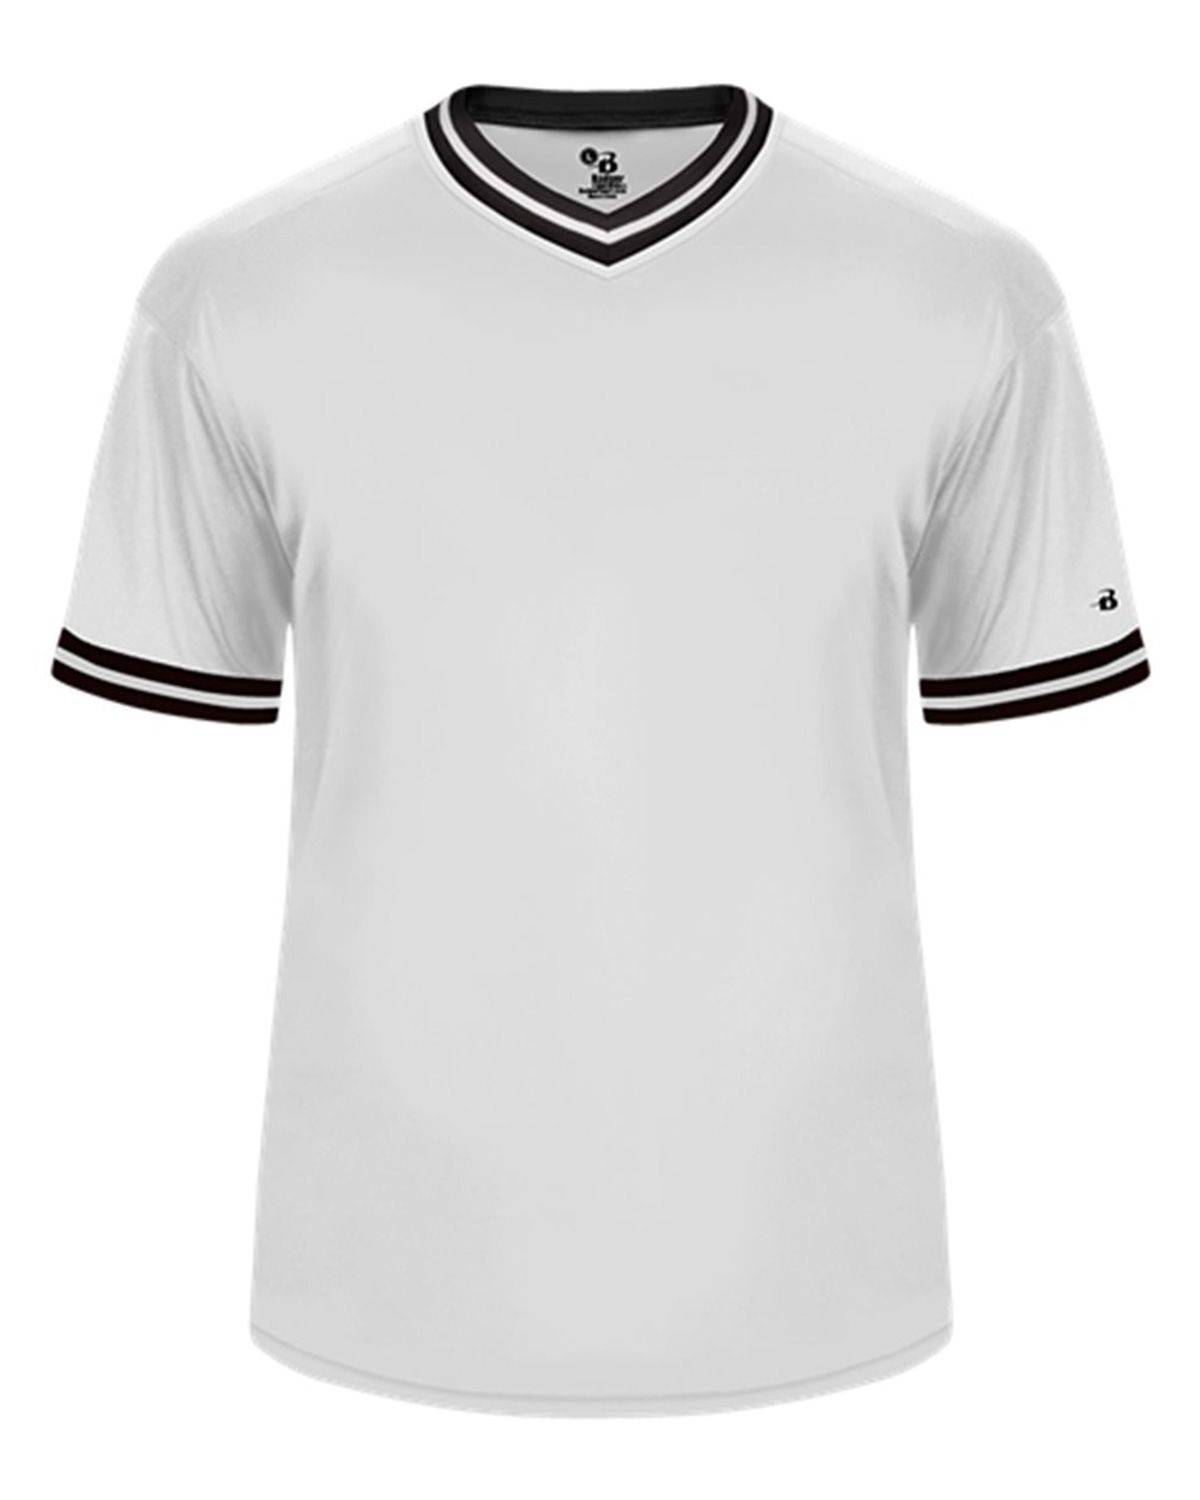 Badger 2974 Youth Vintage Jersey - White/ Black/ White - XS #vintage